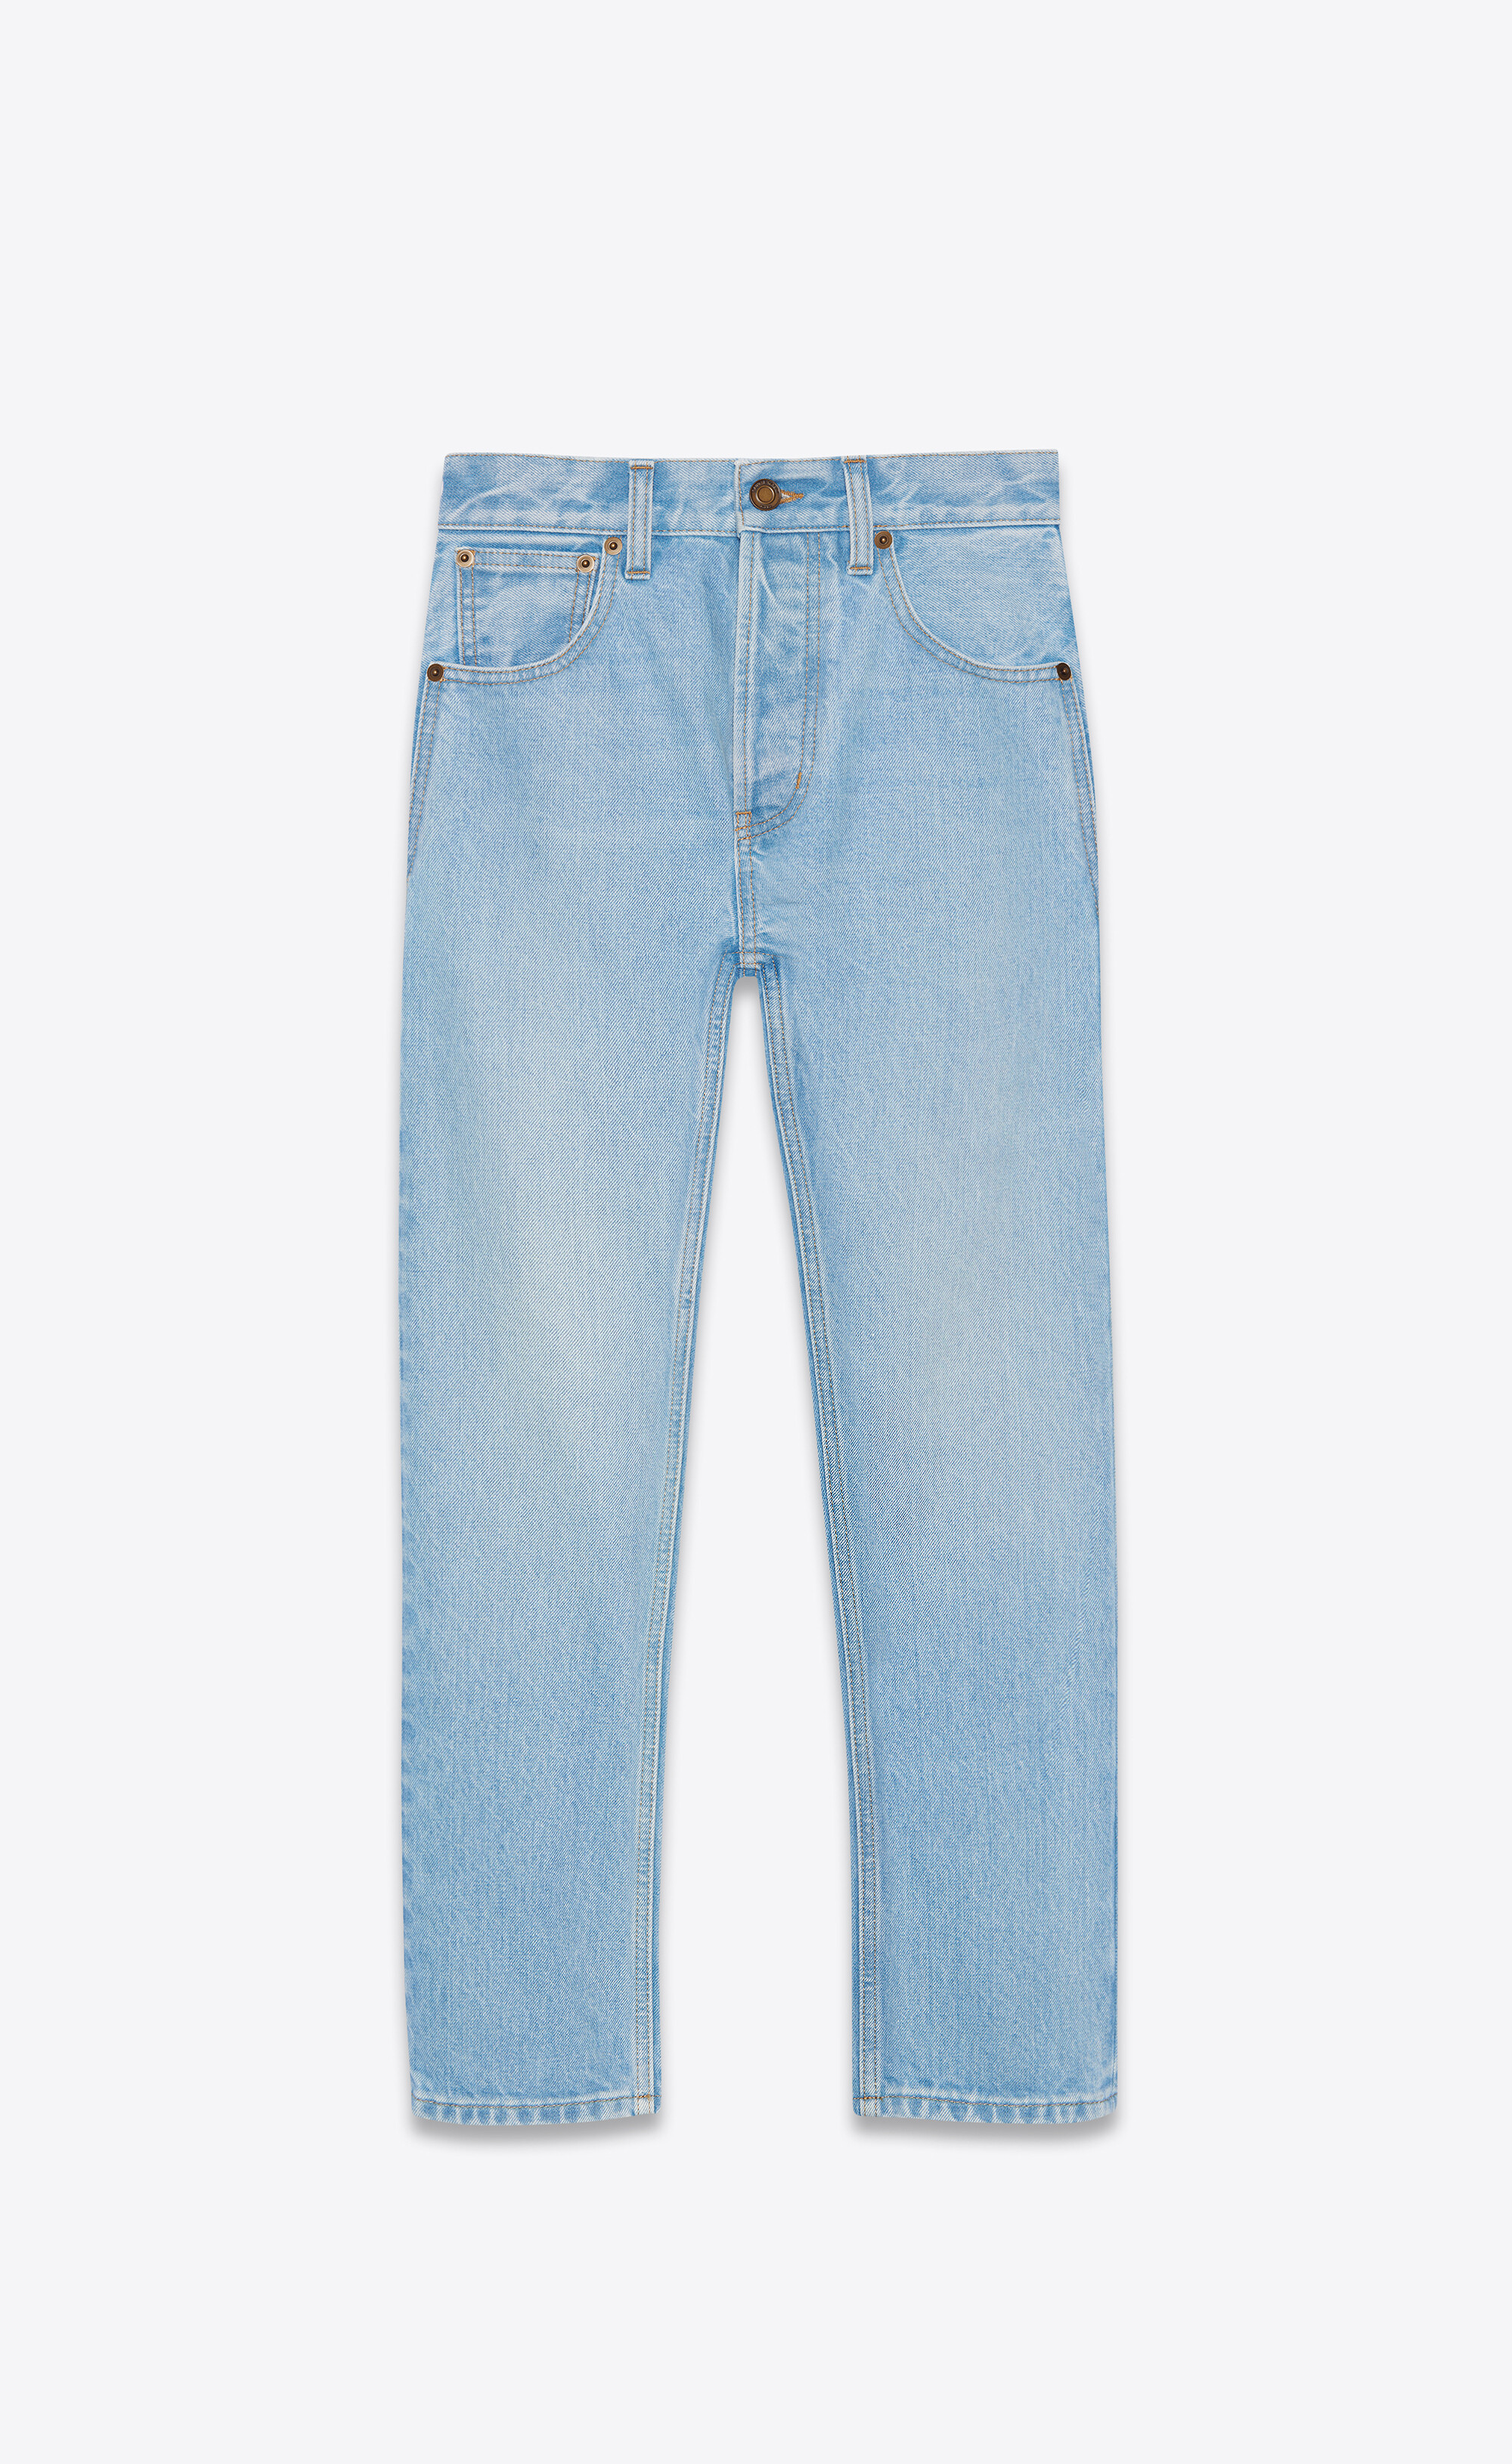 authentic jeans in basic blue denim